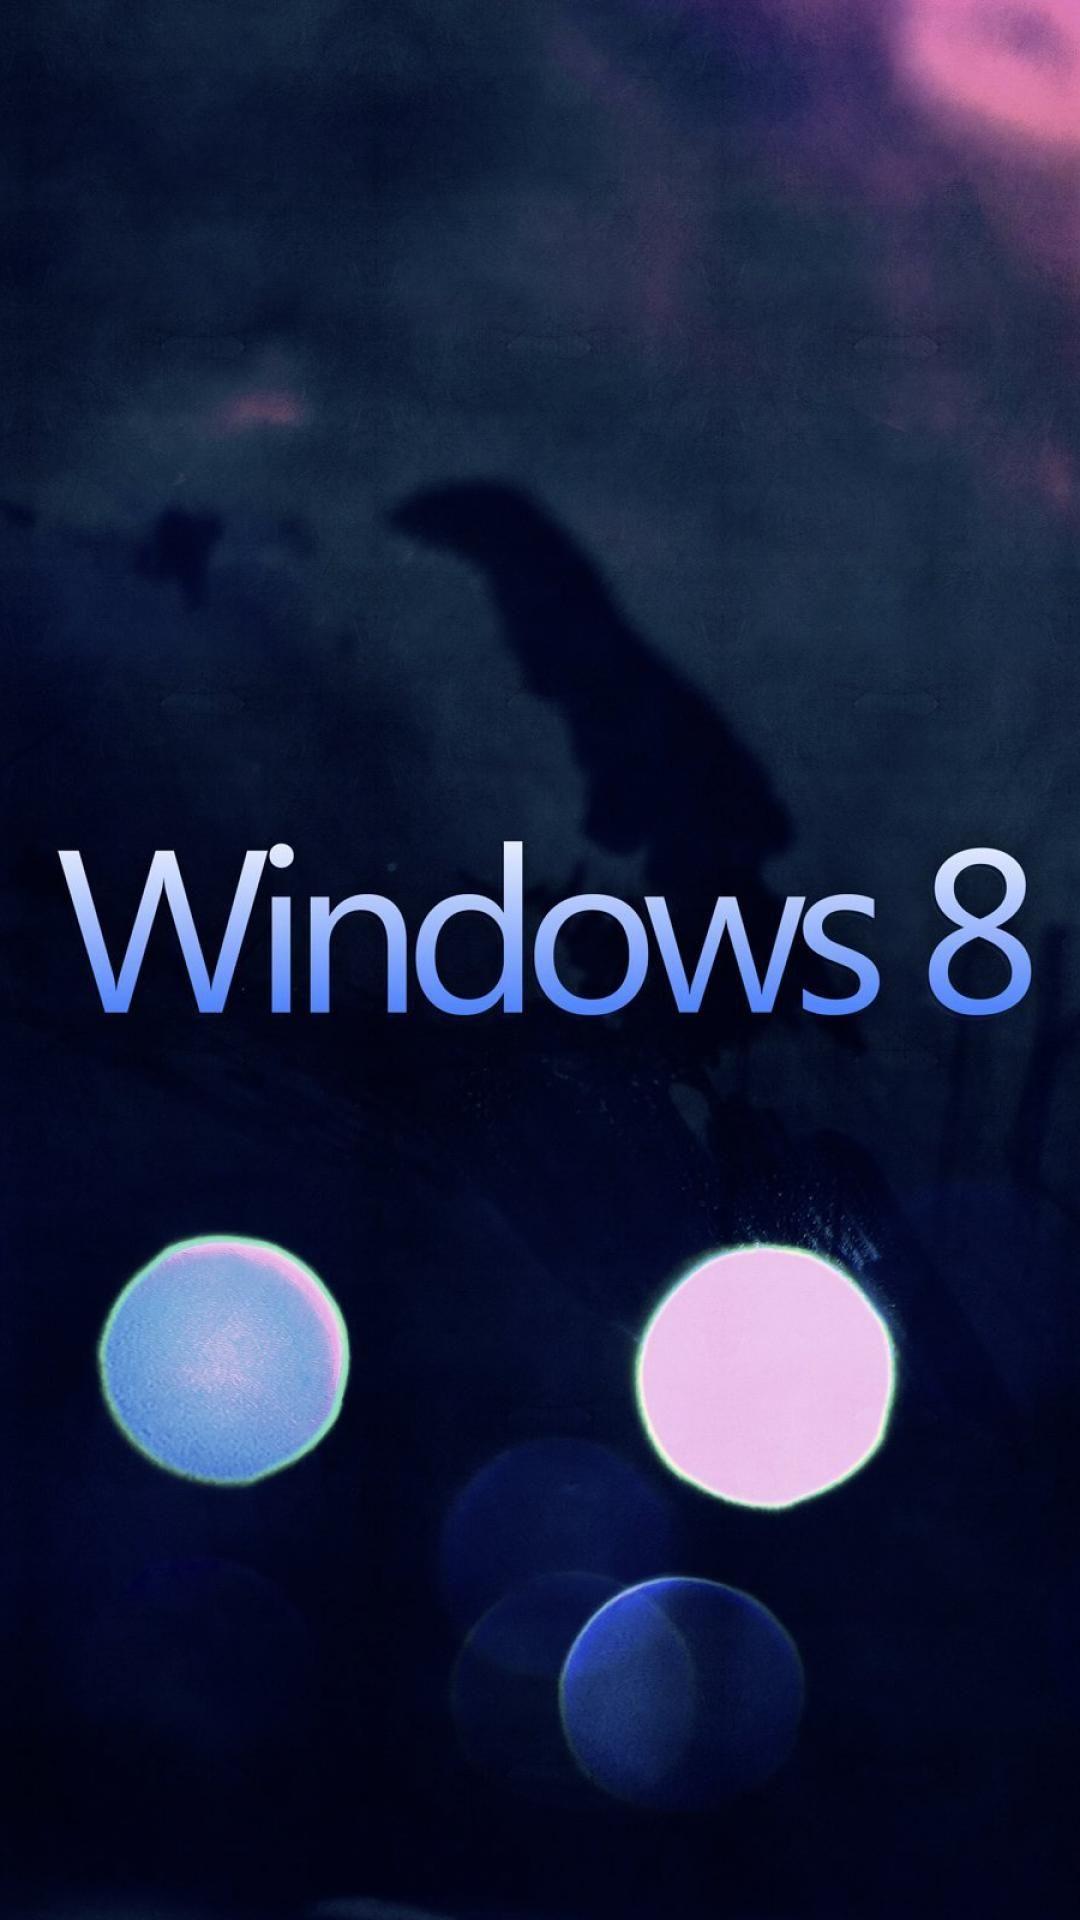 Dark Windows 8 wallpaper